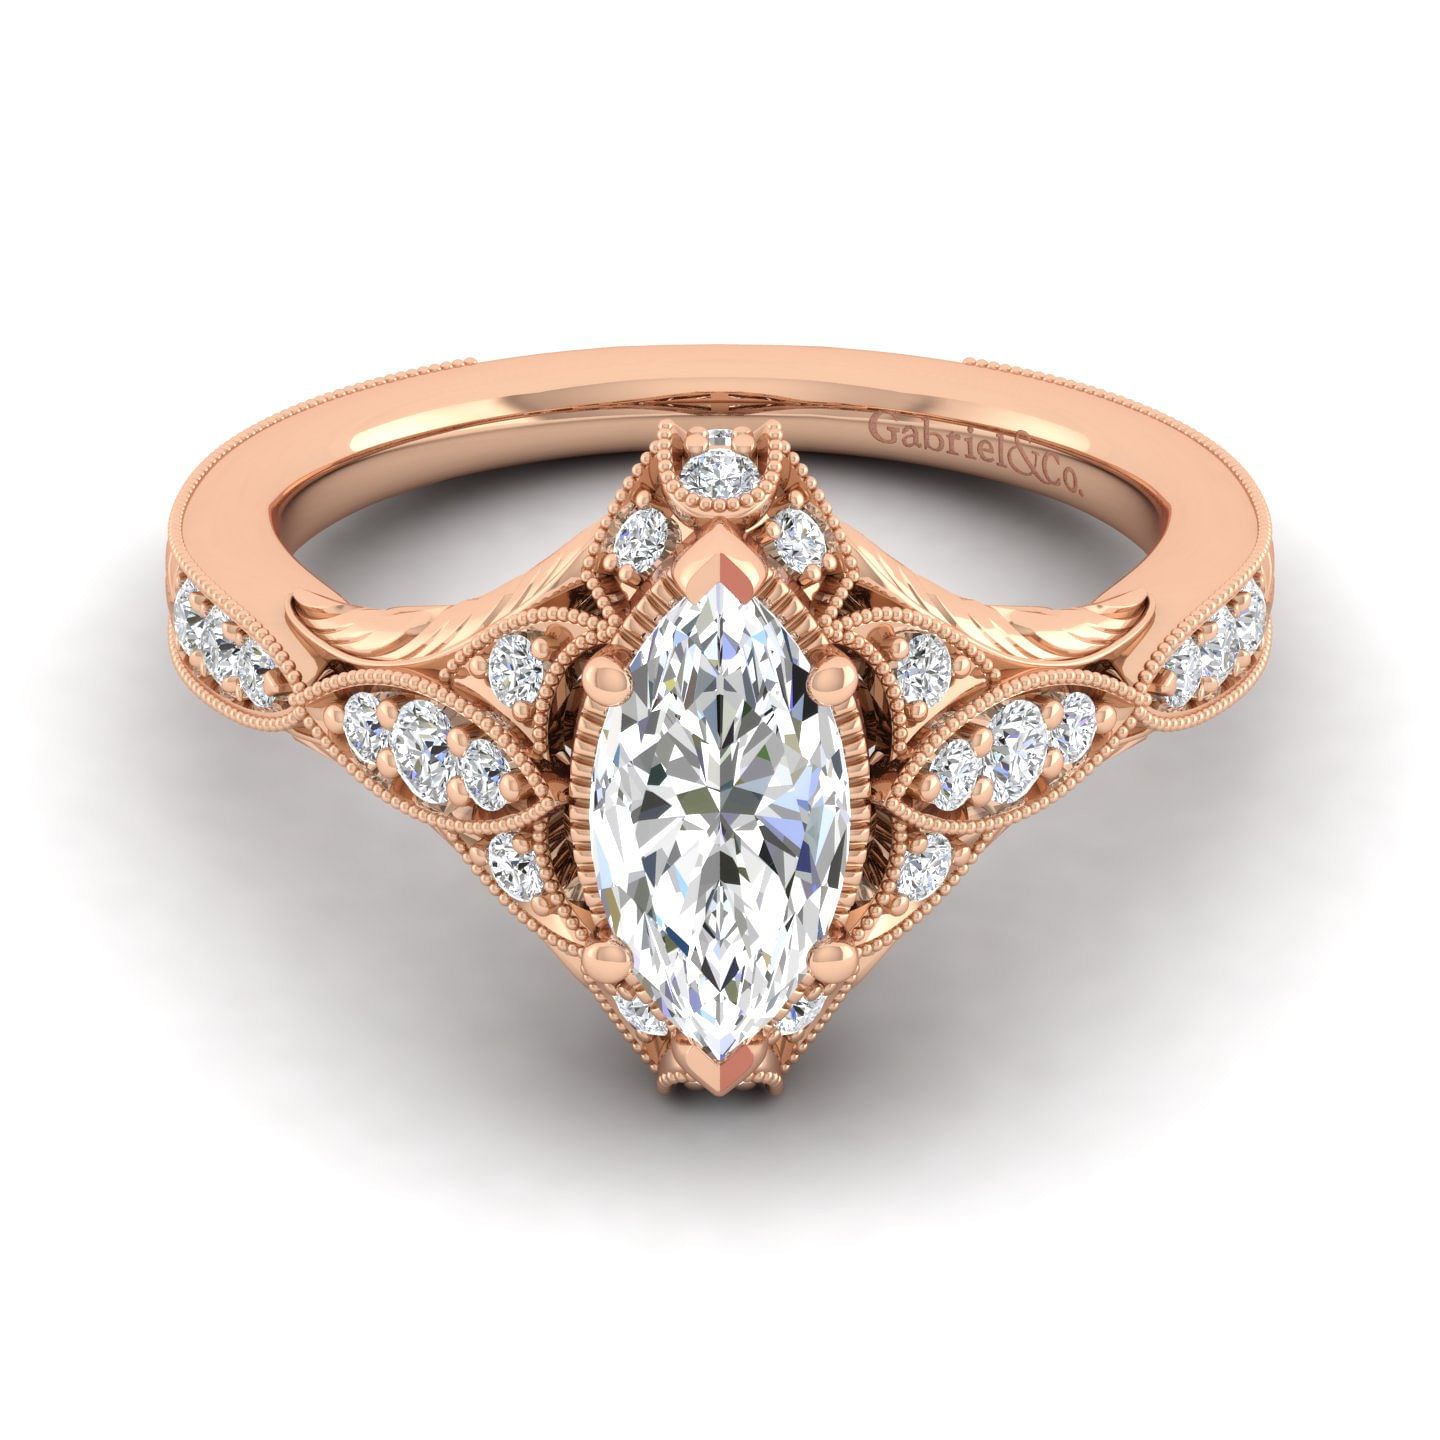 Unique 14K Rose Gold Vintage Inspired Marquise Shape Diamond Halo Engagement Ring